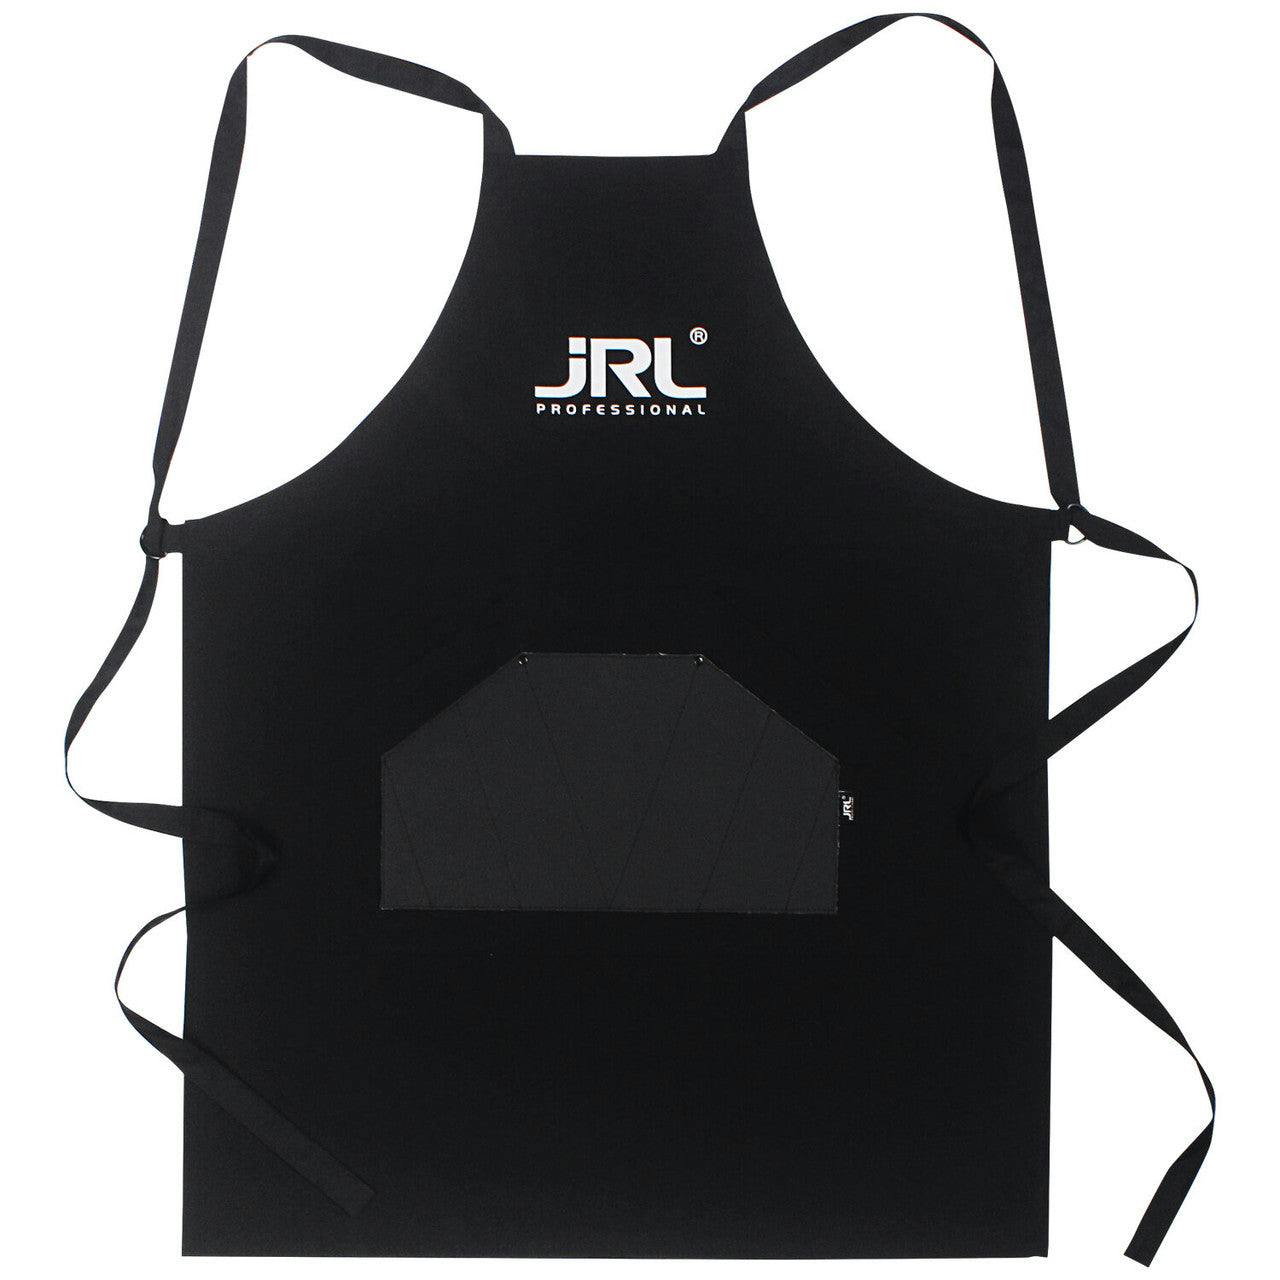 JRL Professional Shop Apron - Black